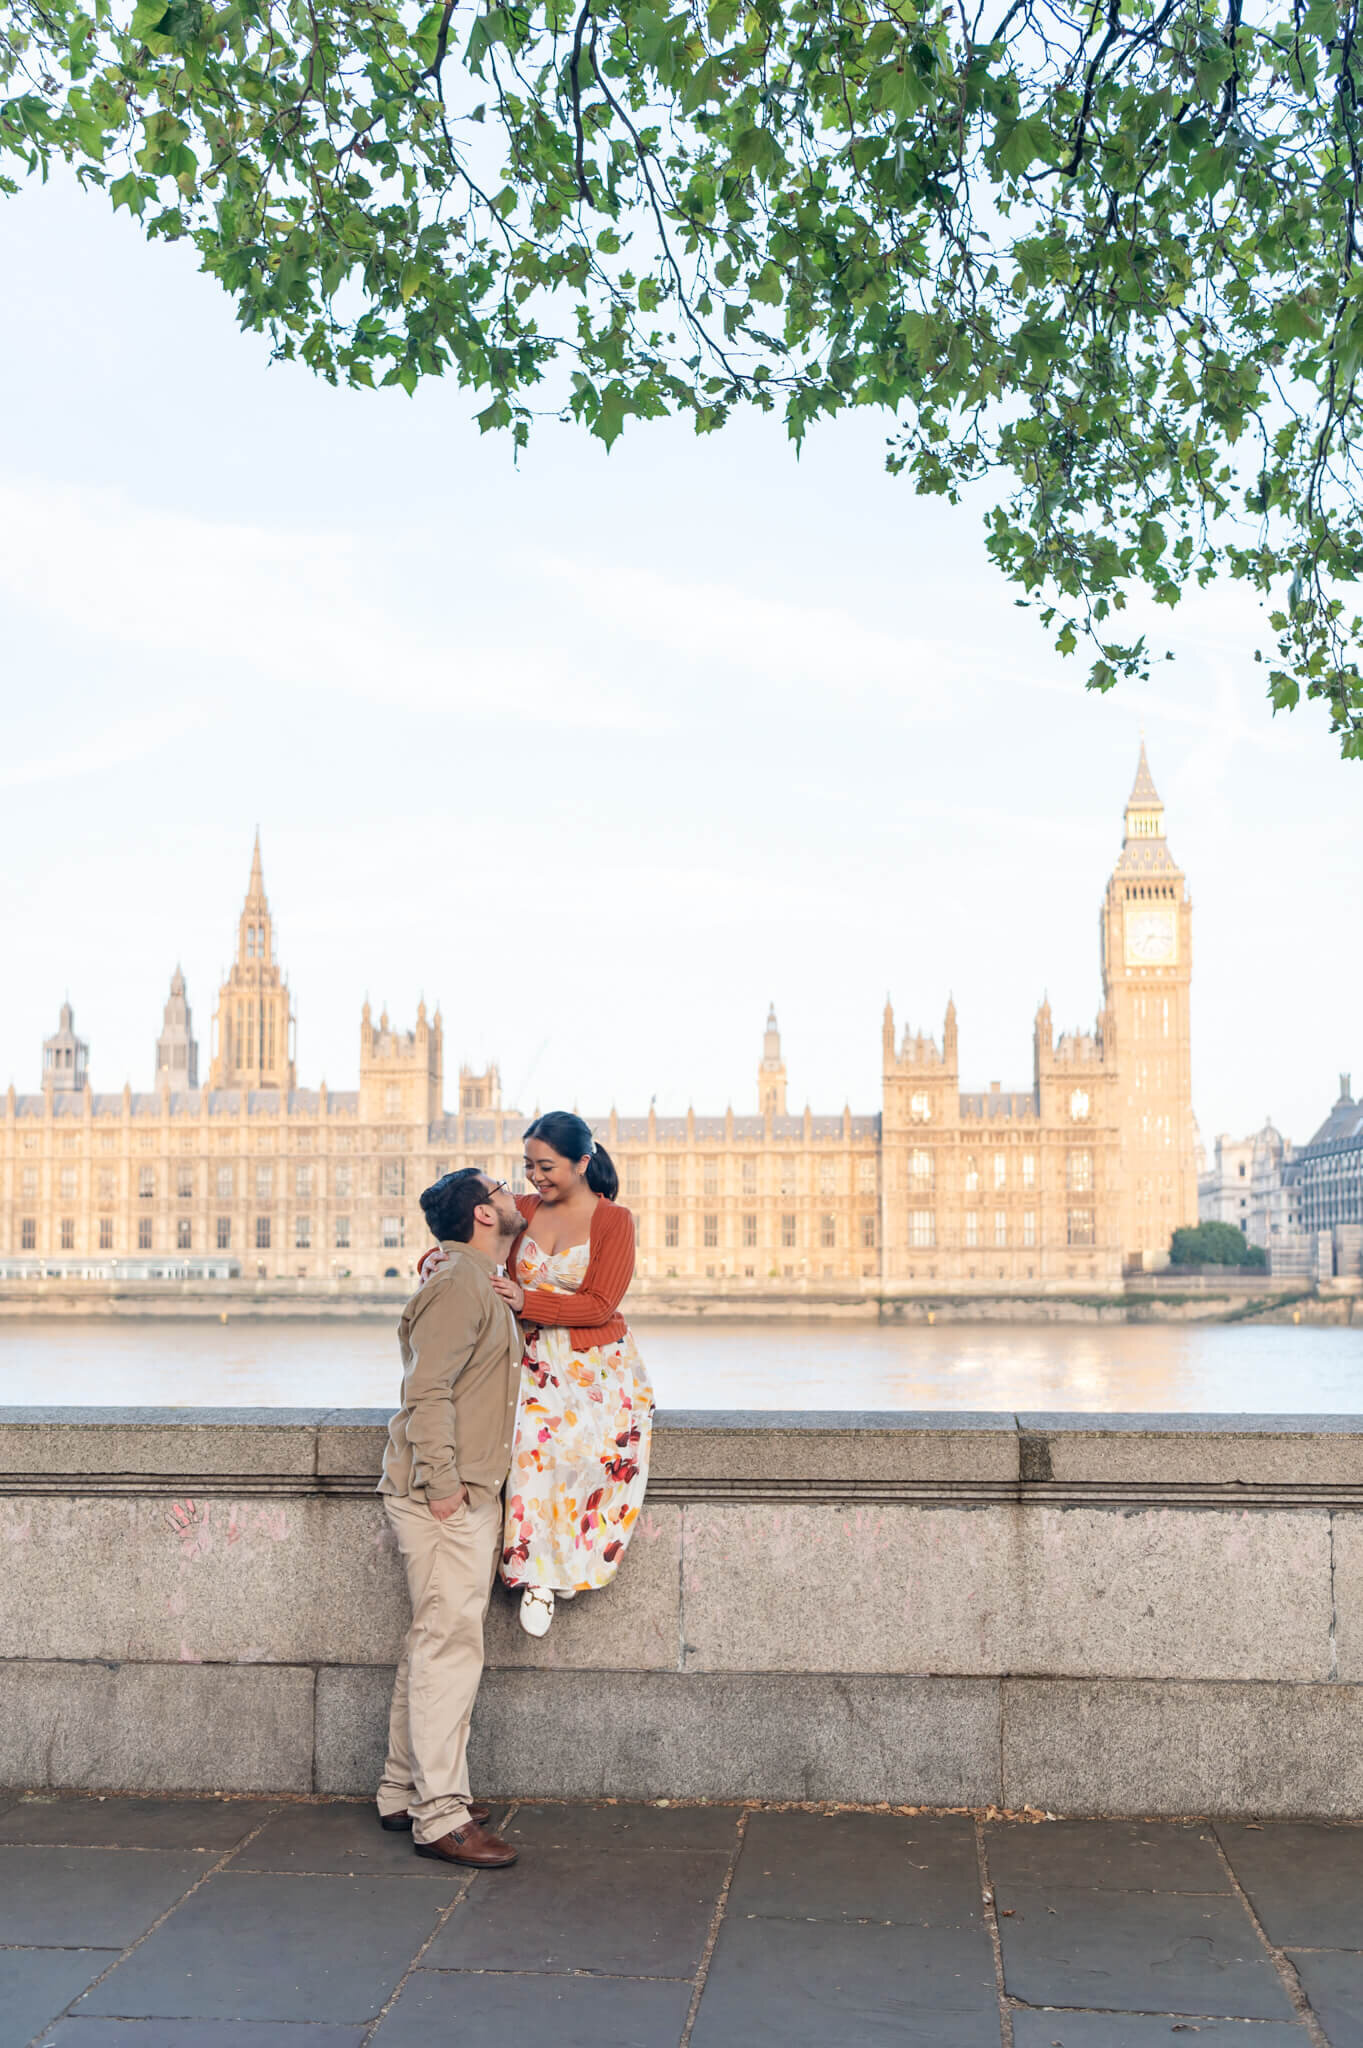 London Engagement Proposal & Wedding Photographer - Chloe Bolam - K&J - 16.09.23 -17